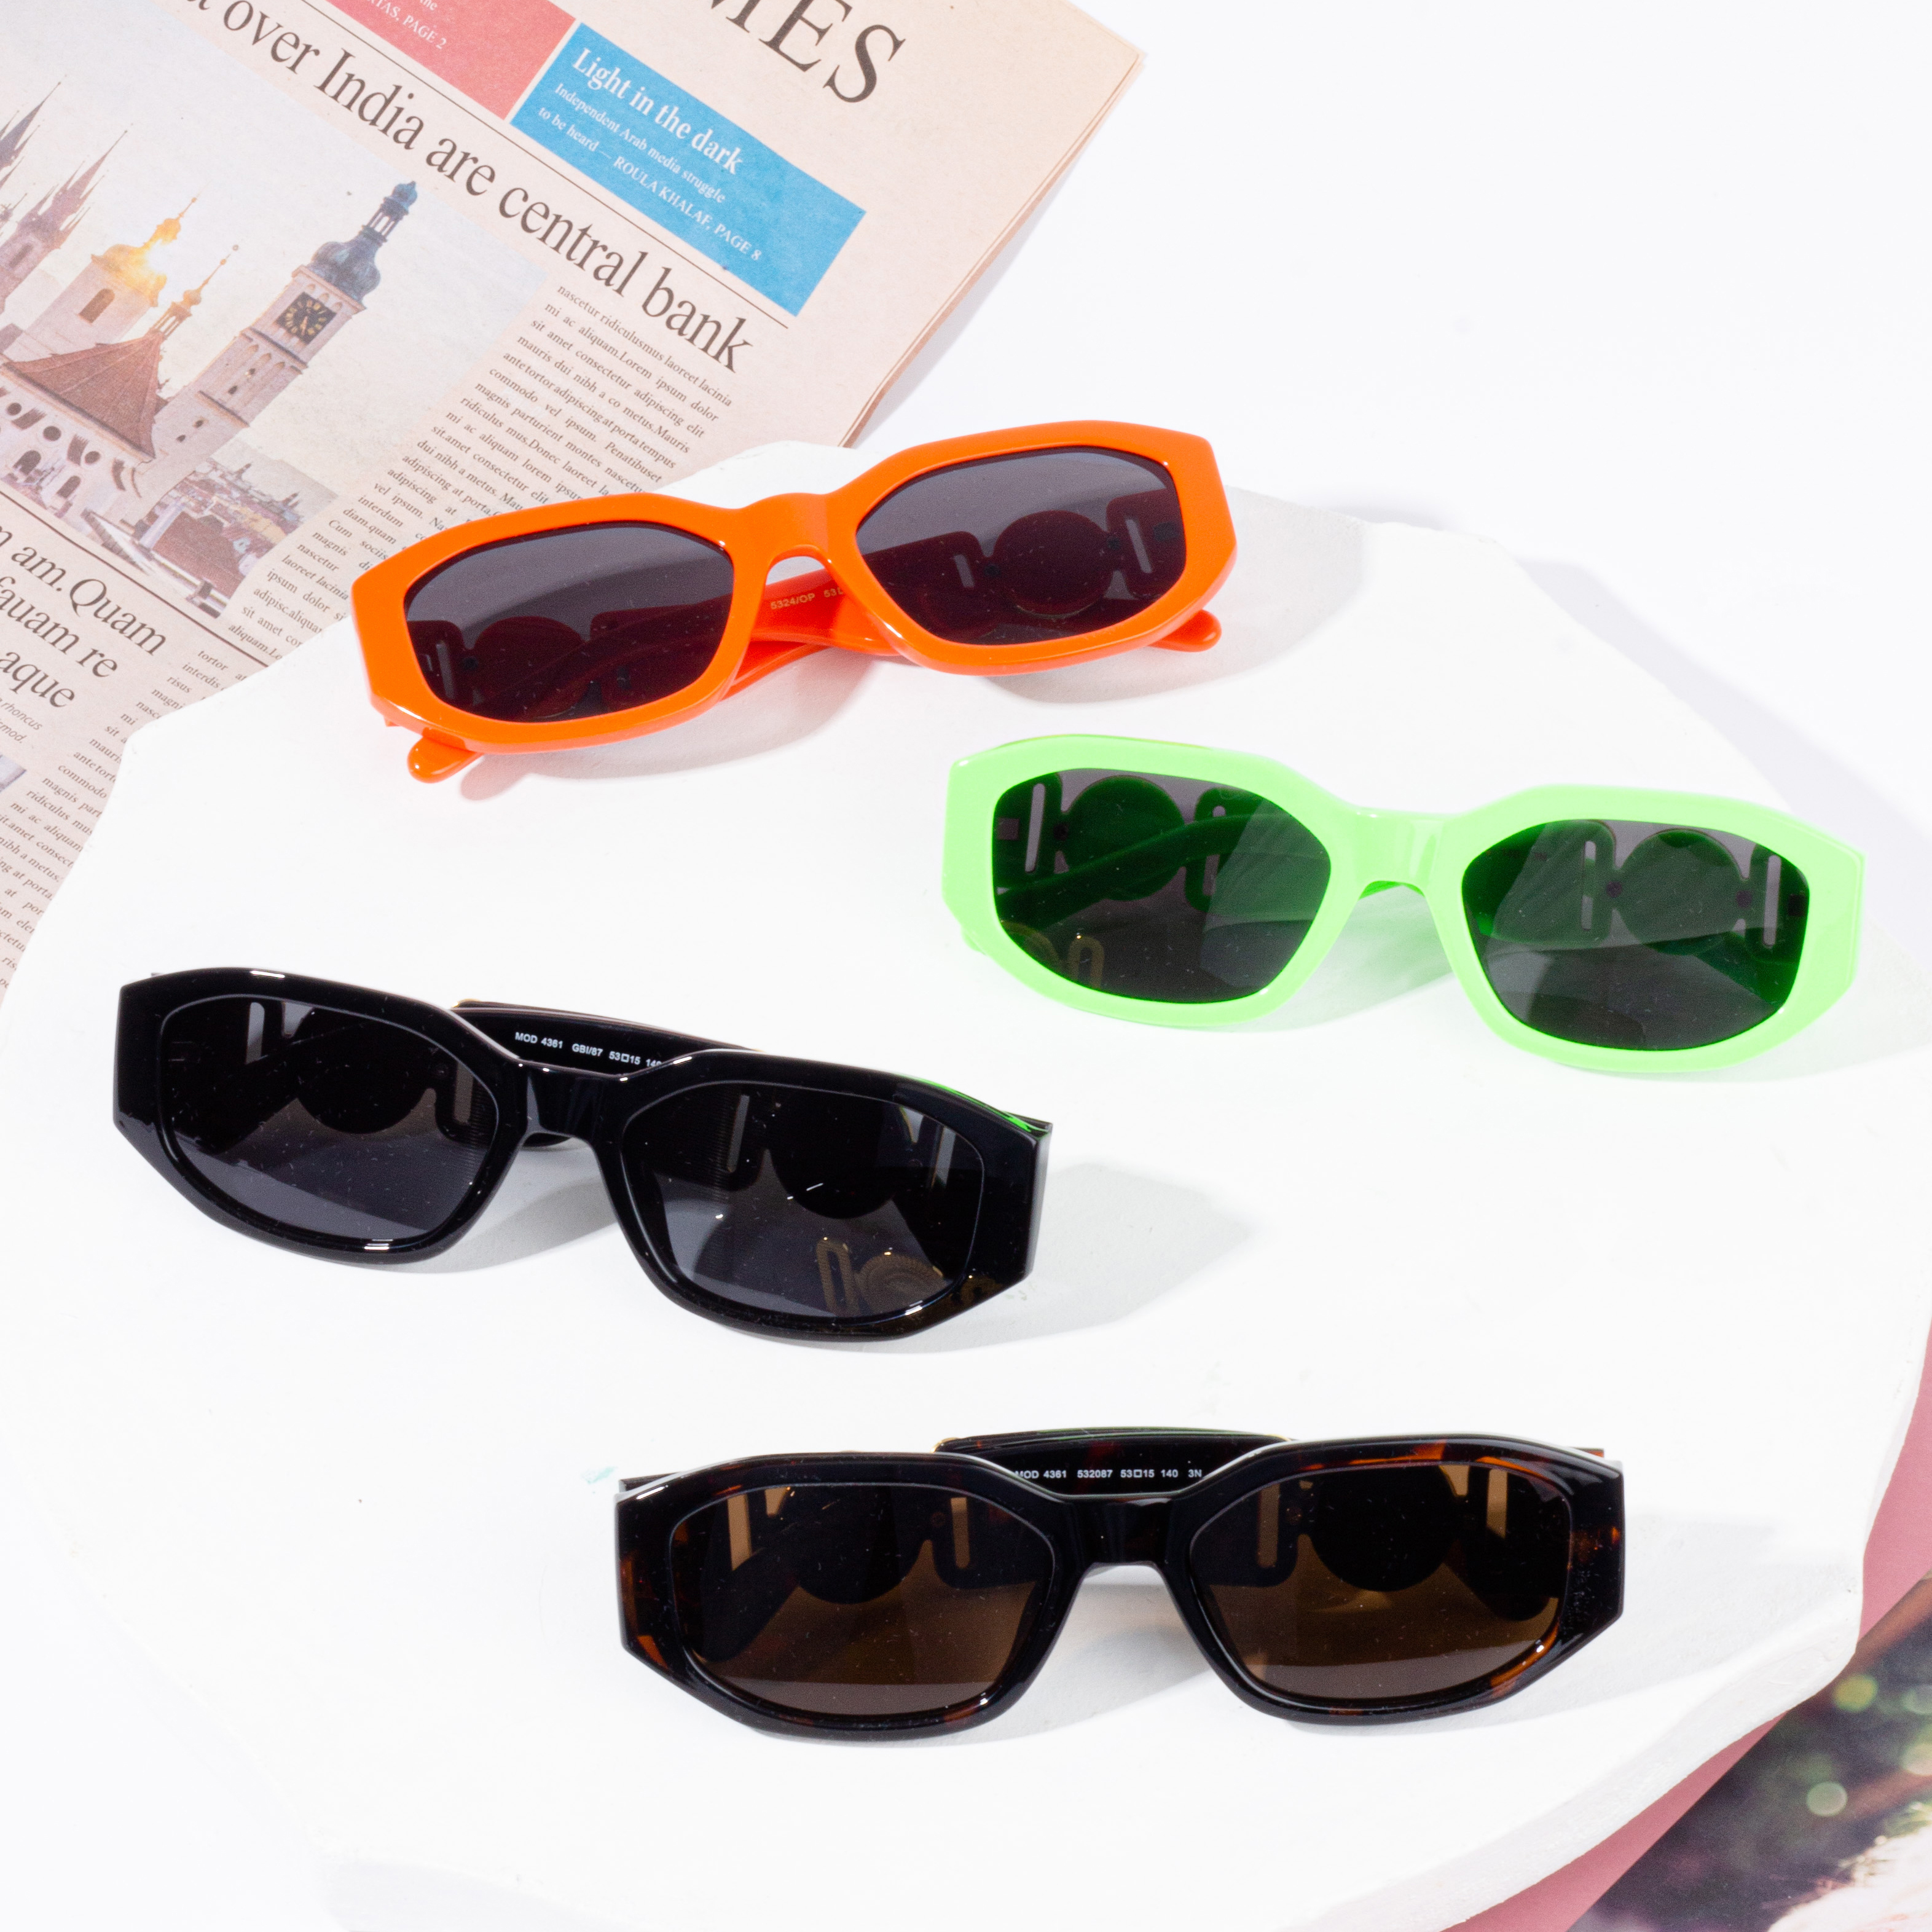 Factory Price For Women’s Ray Ban Sunglasses - fashion colorful ladies sunglasses brand  – HJ EYEWEAR